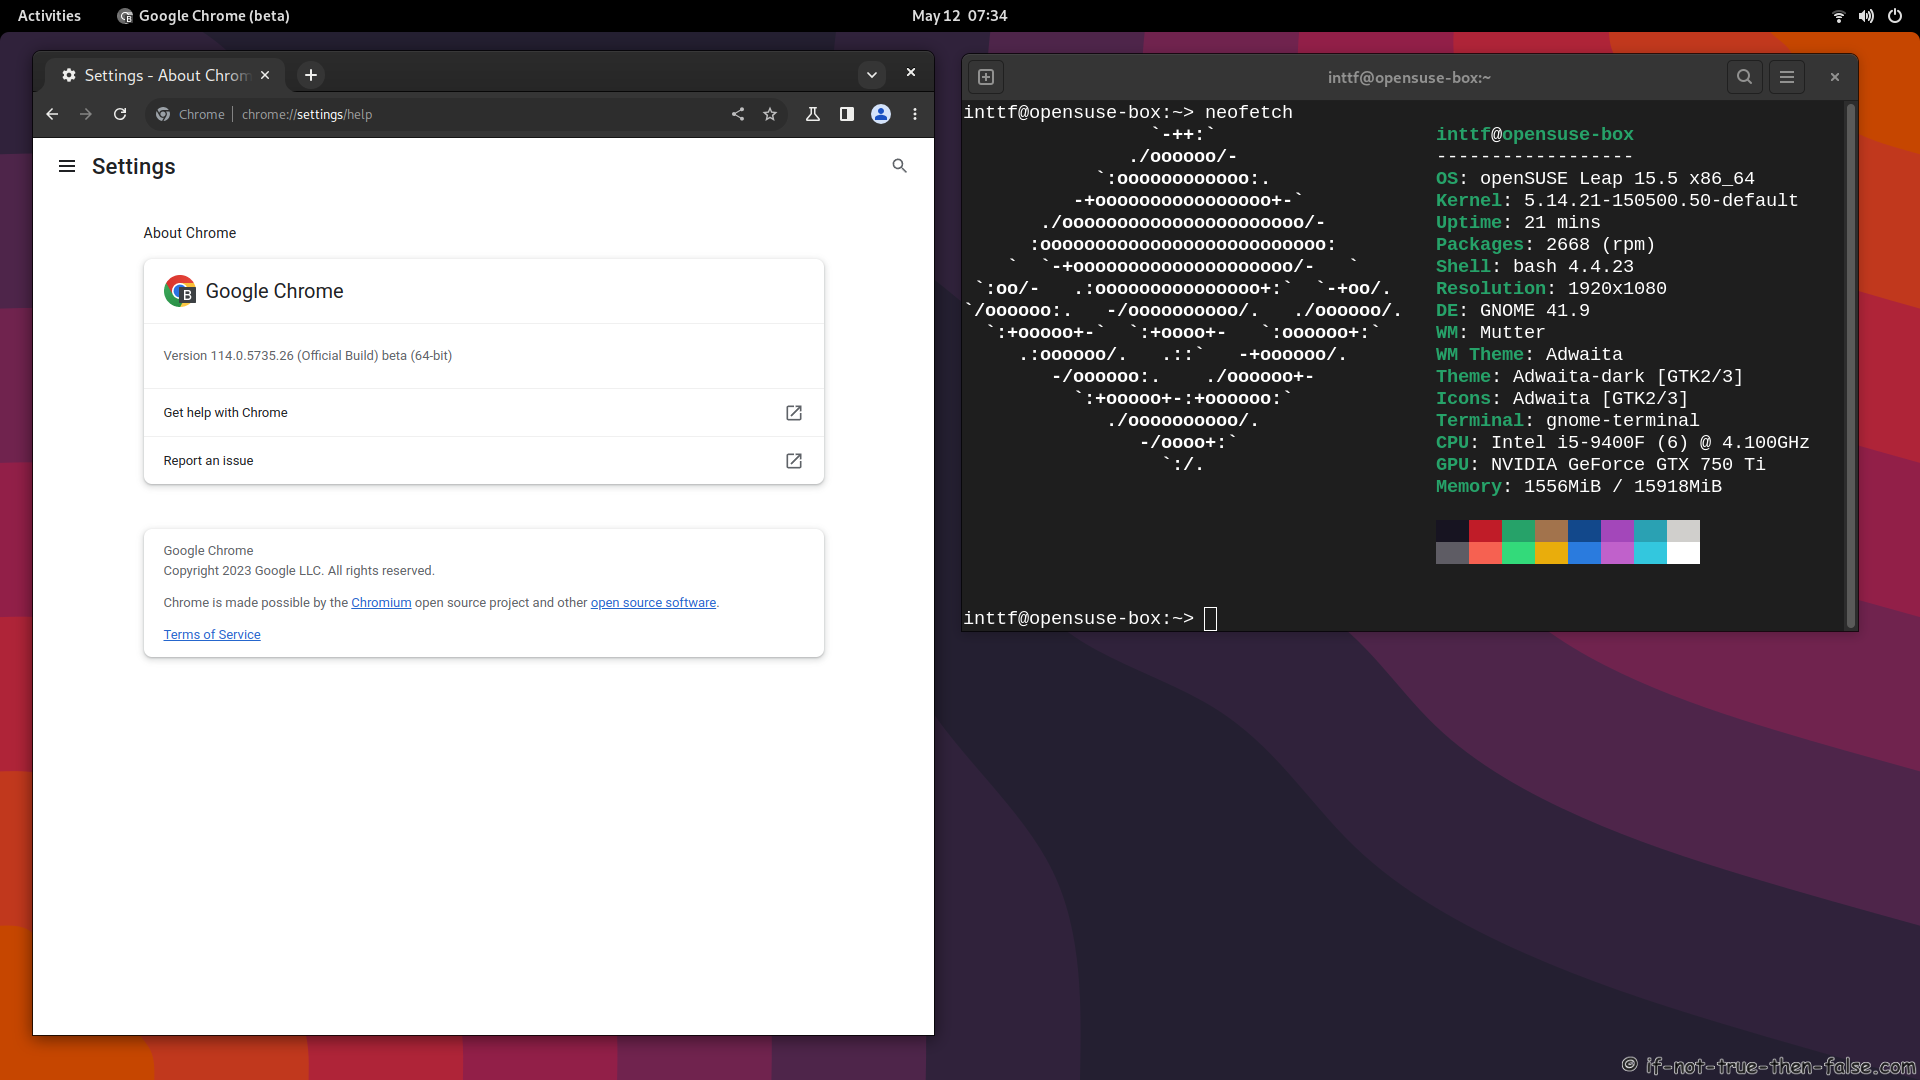 Google Chrome Beta running on openSUSE Leap 15.5